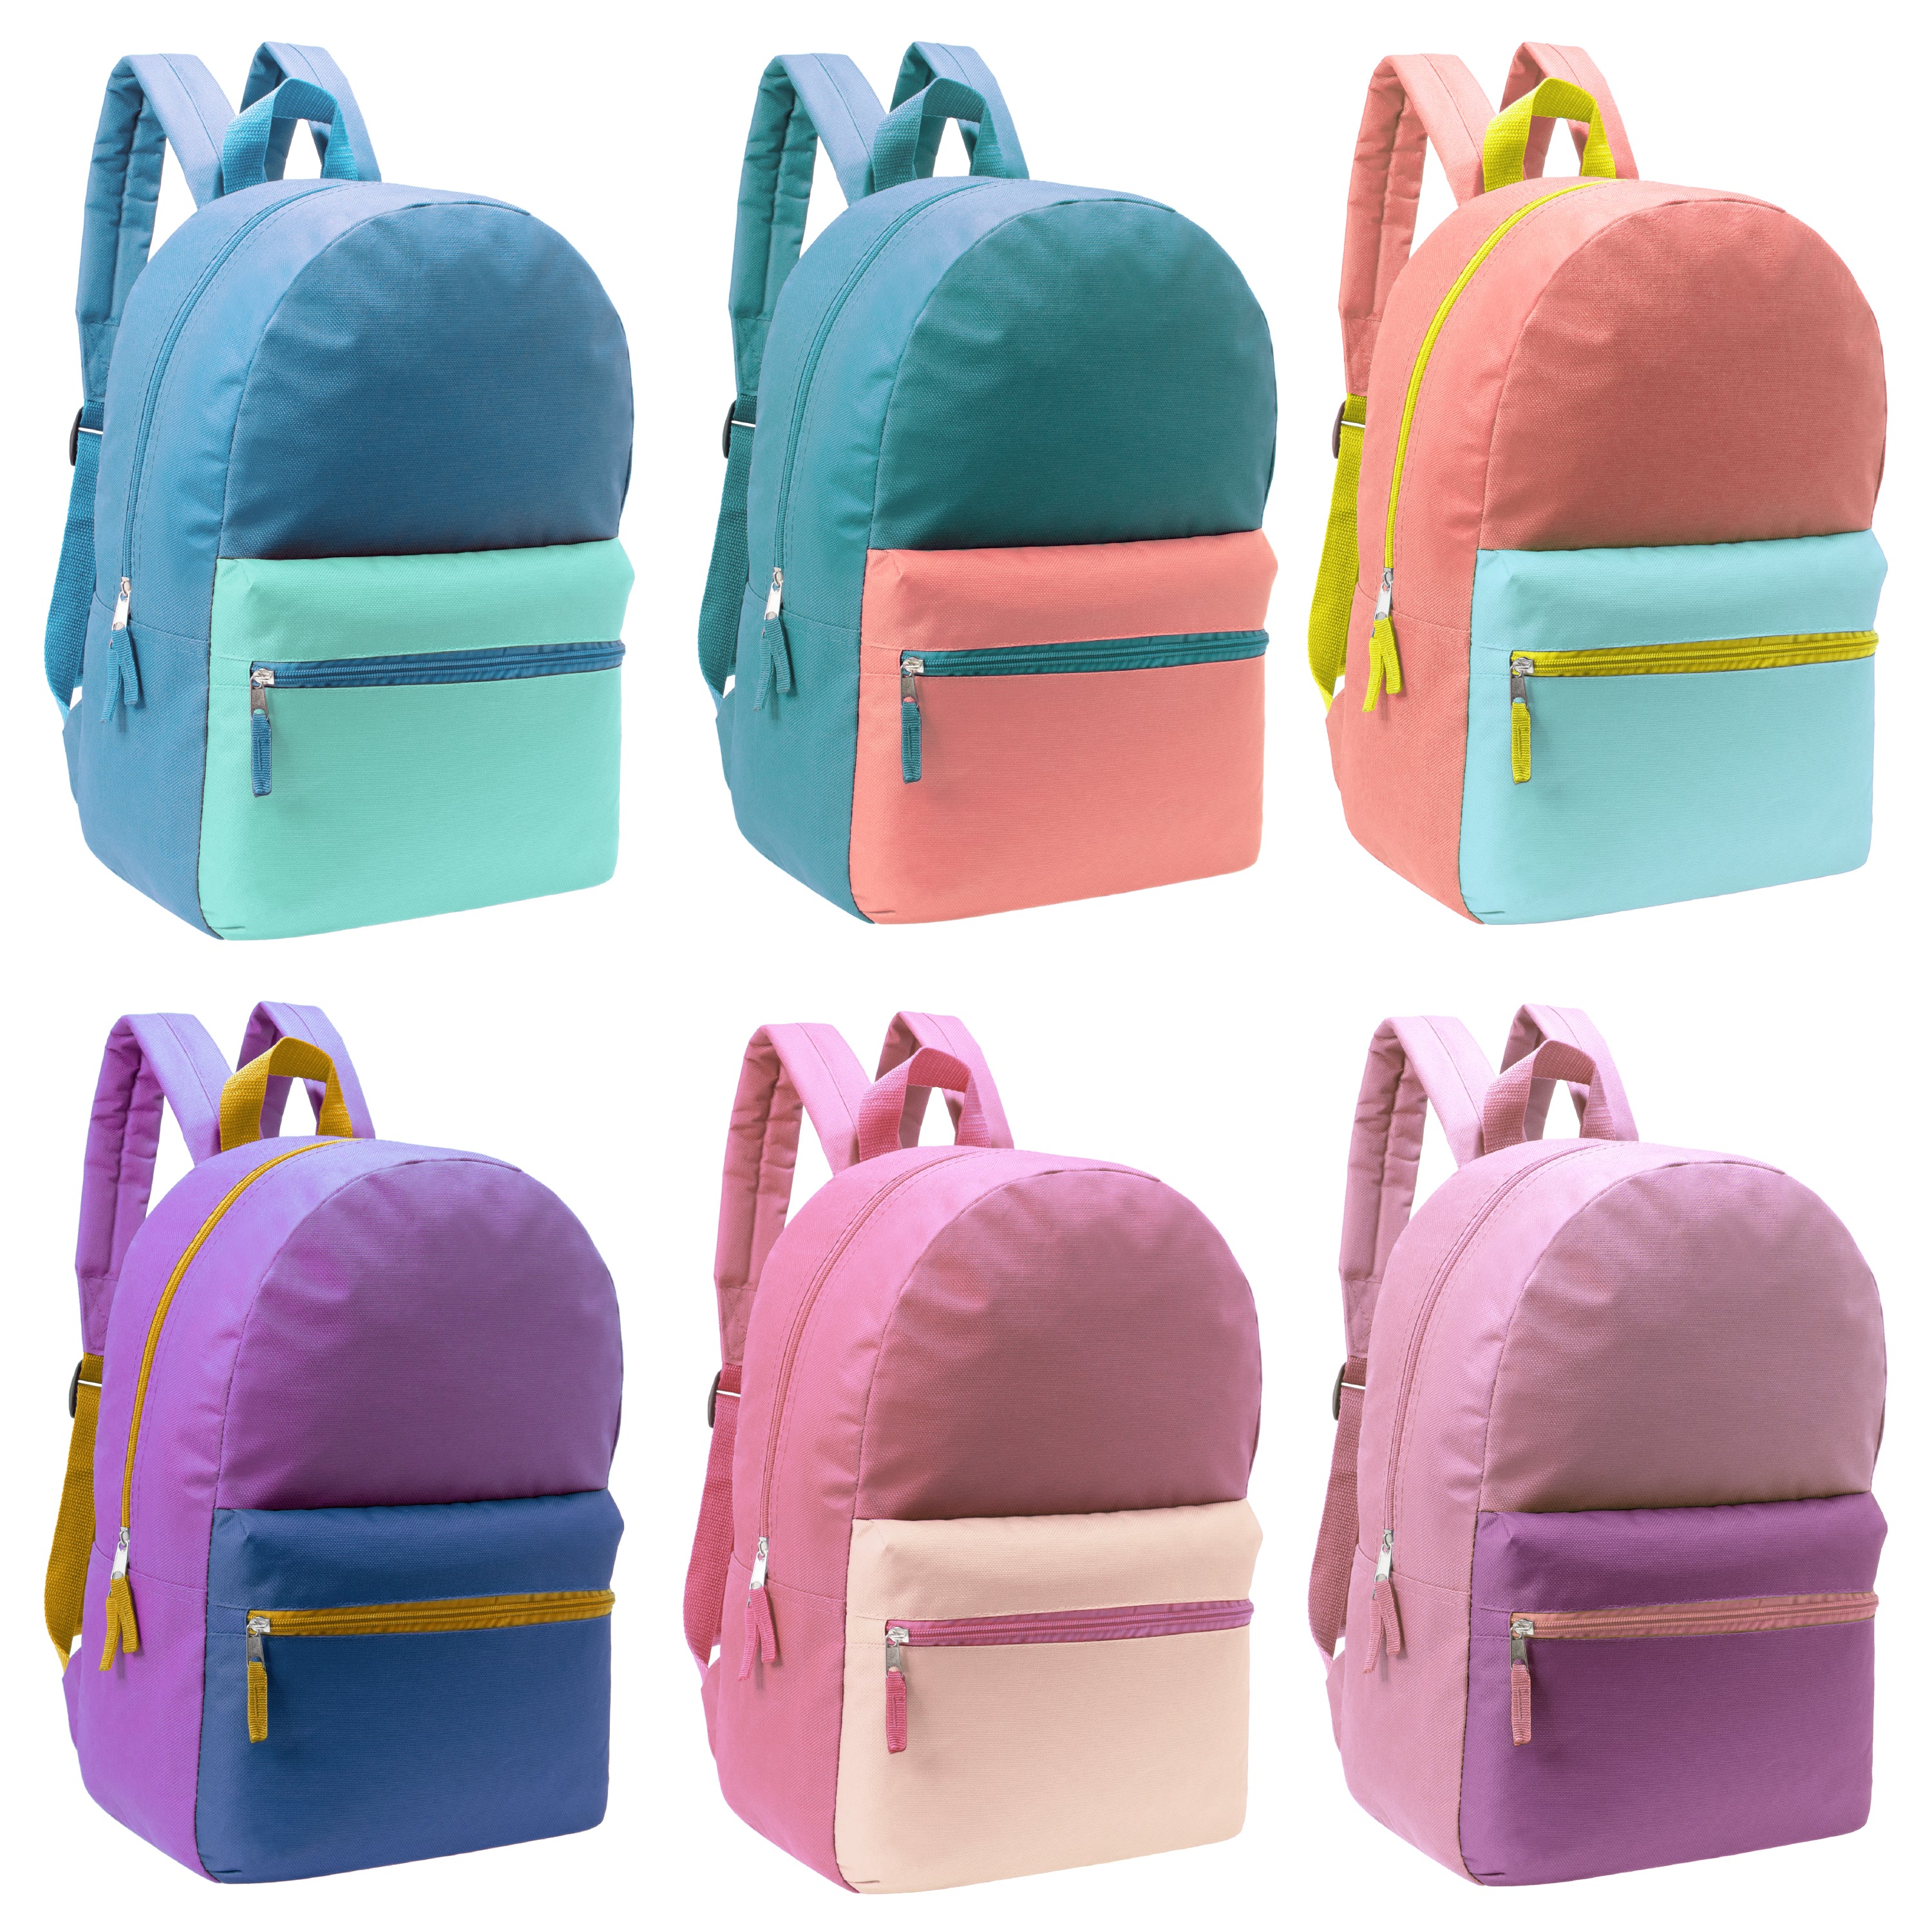 17" Kids Basic Wholesale Backpack in 6 Girl Colors 2 Tone - Bulk Case of 24 Backpacks